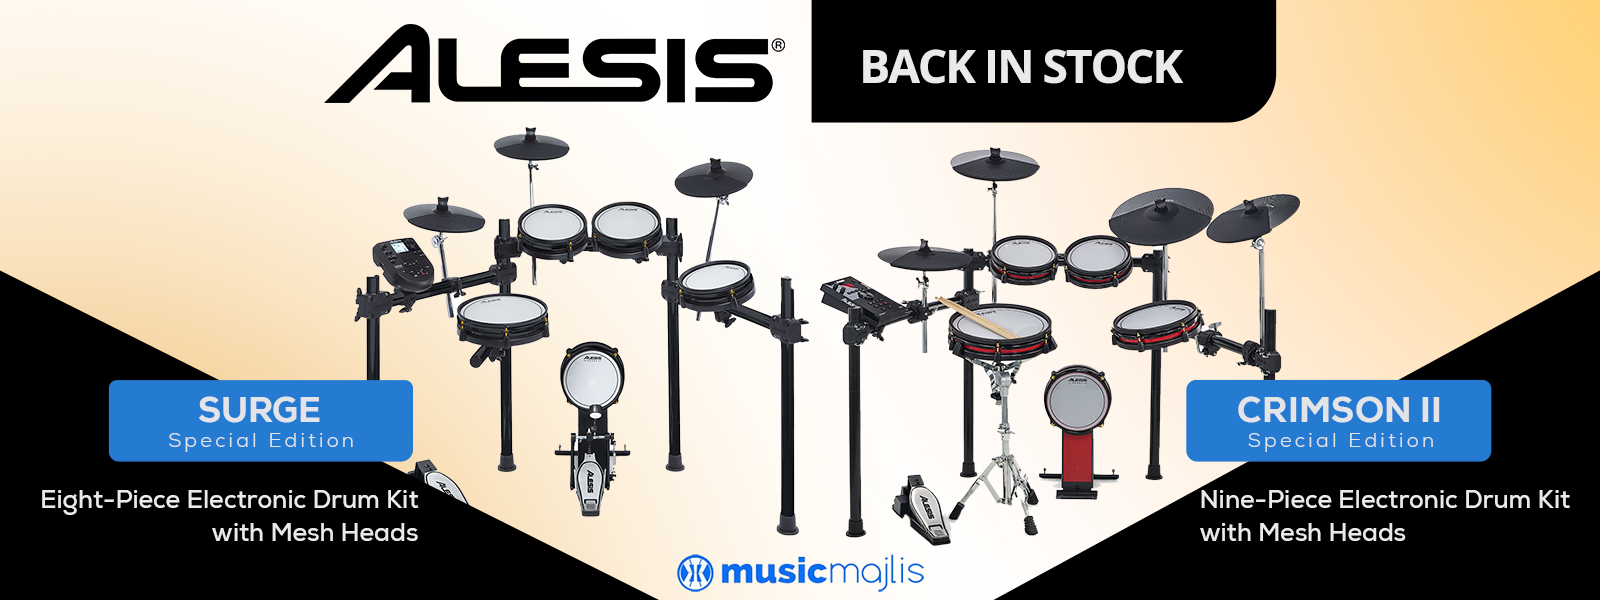 Alesis Drum Kits - Back In Stock